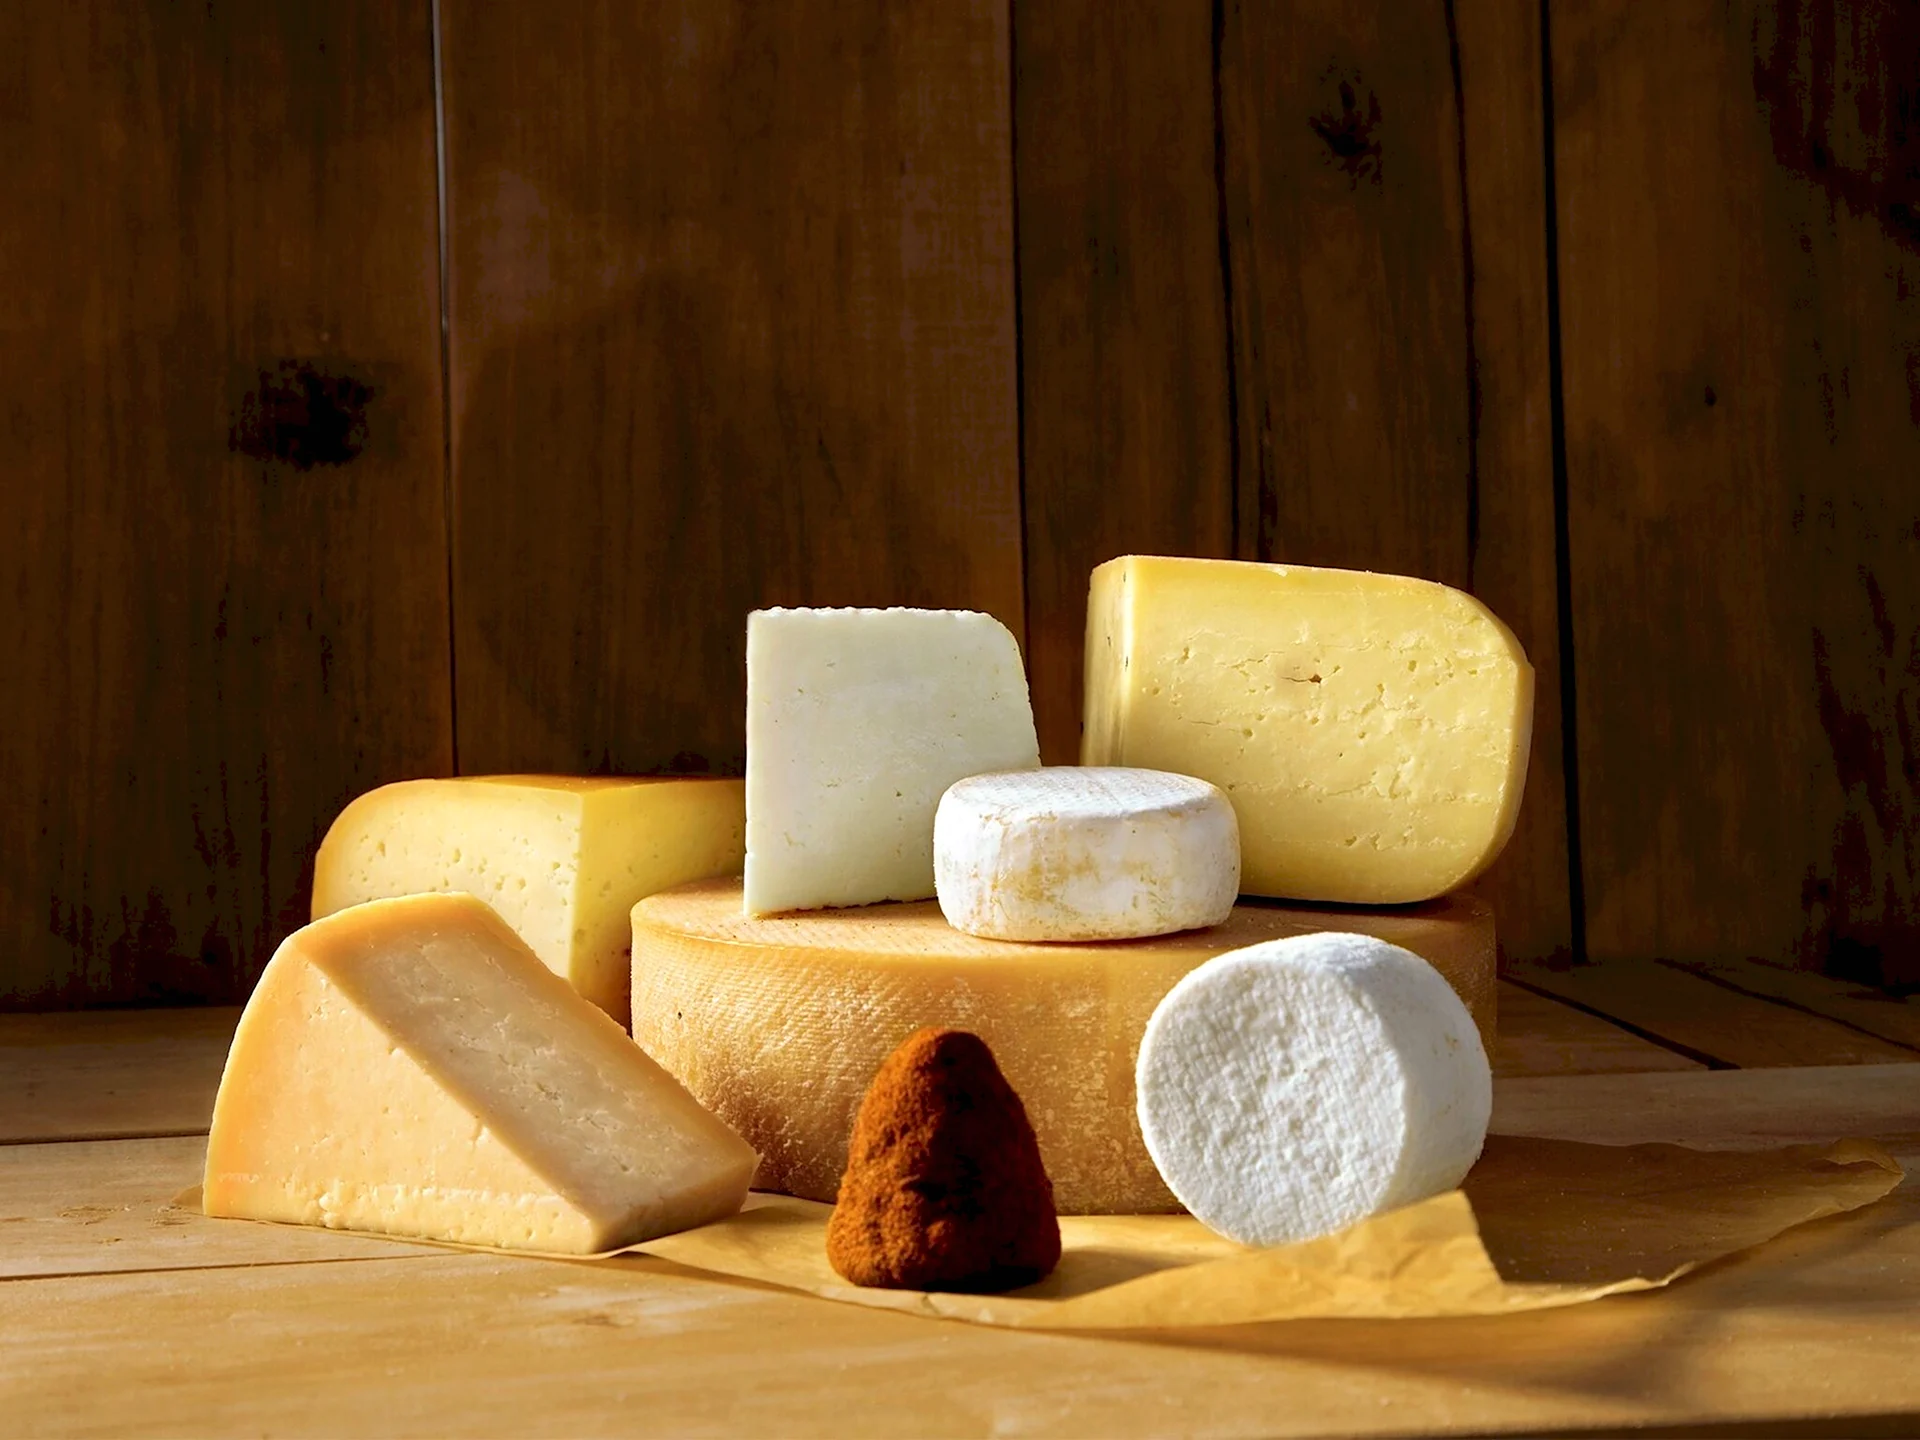 Сыр красиво